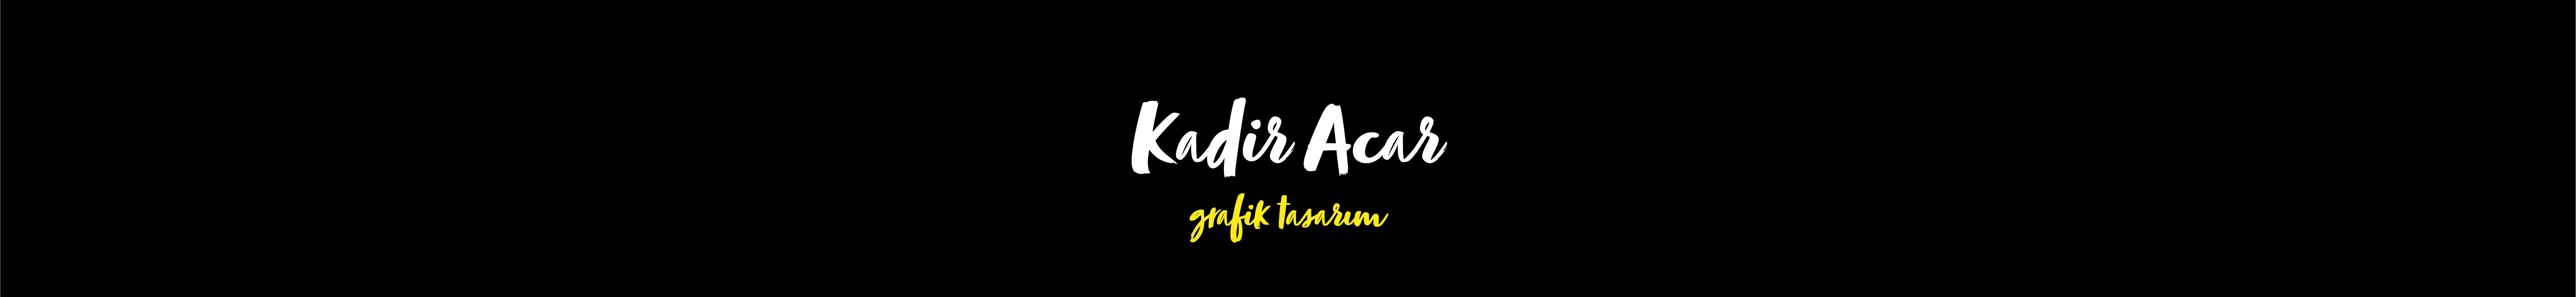 Kadir Acar's profile banner